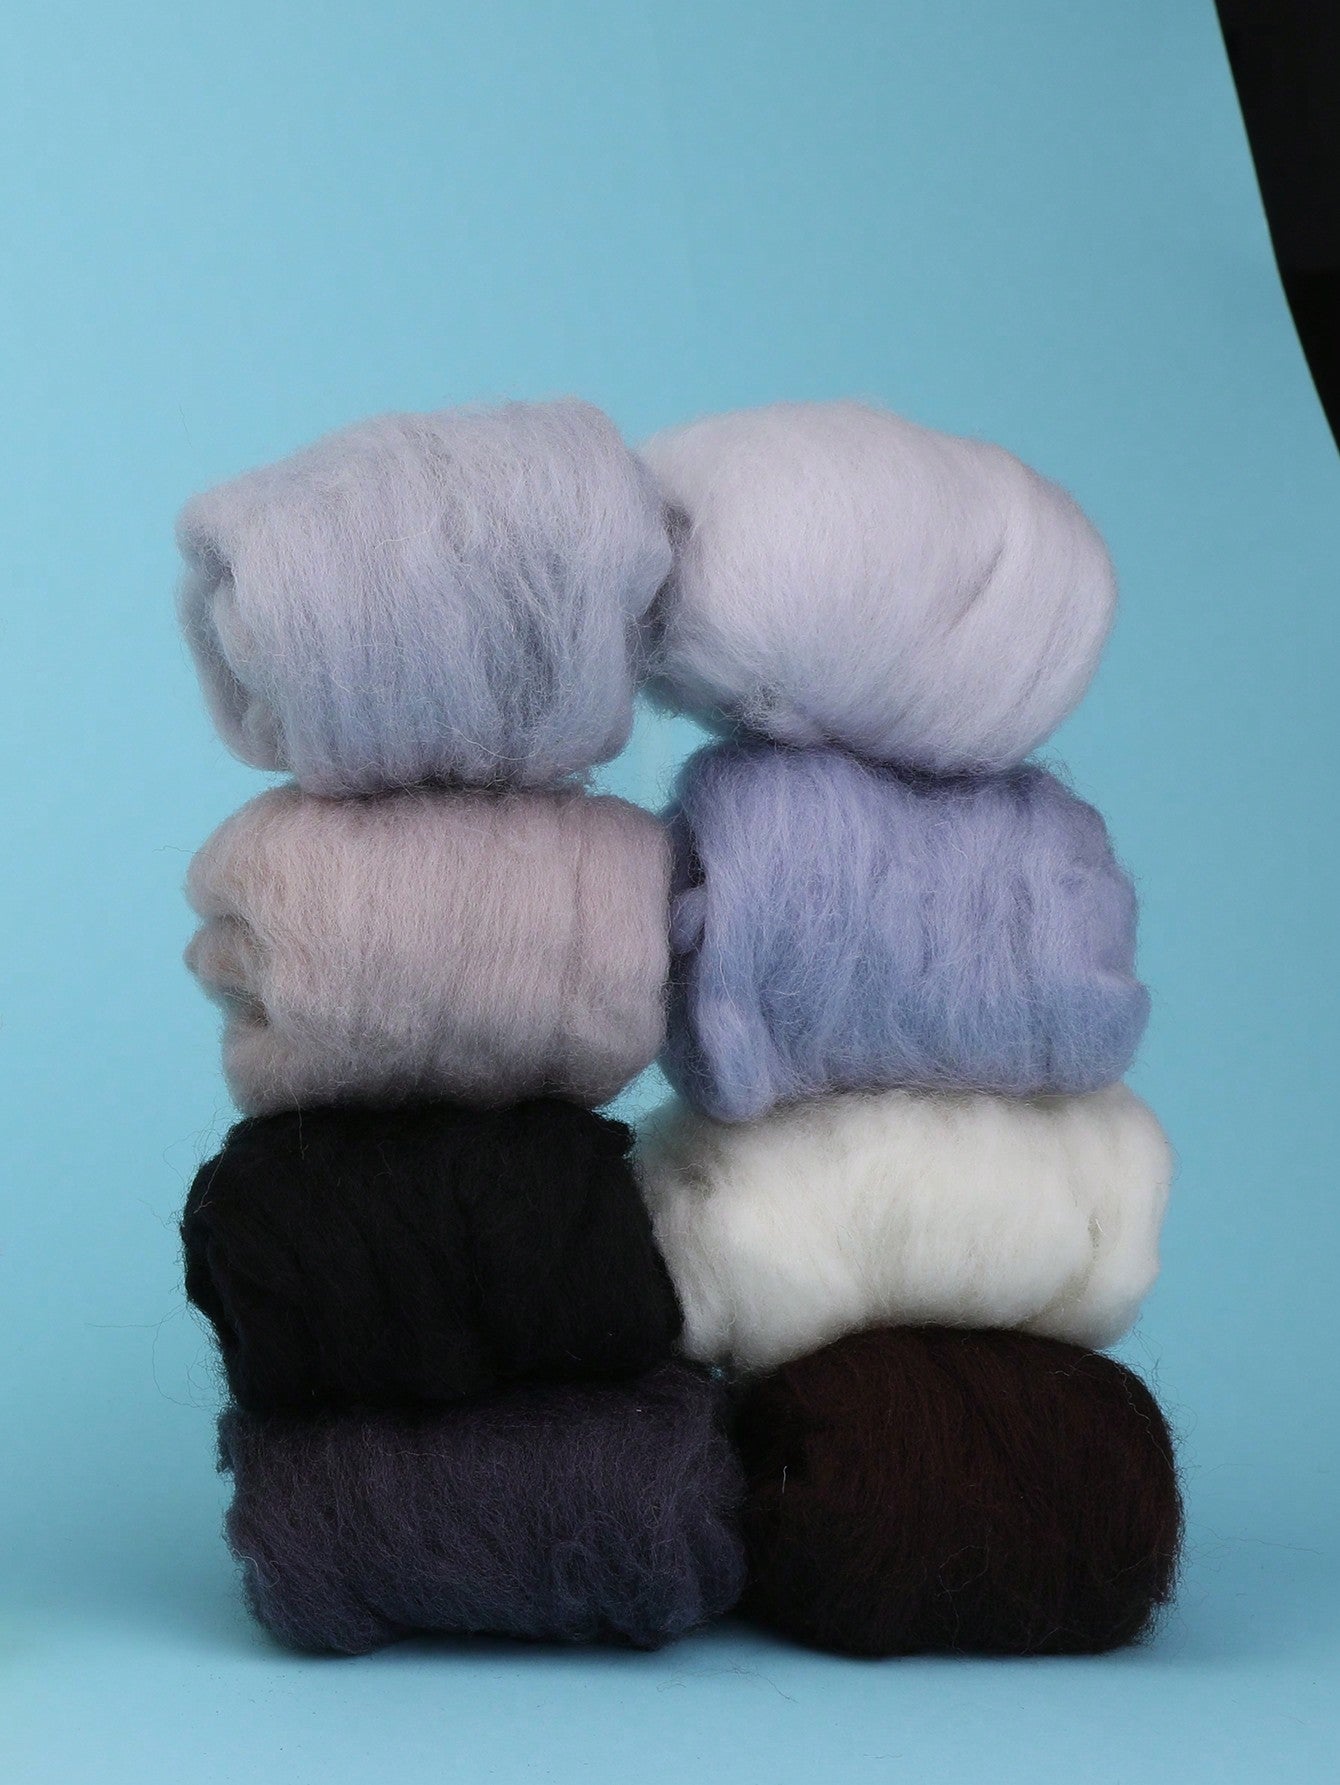 8 Colors Natural Wool Yarn DIY 80g Lot Felt Wool Roving Yarn 10g/color for Crafting 💜